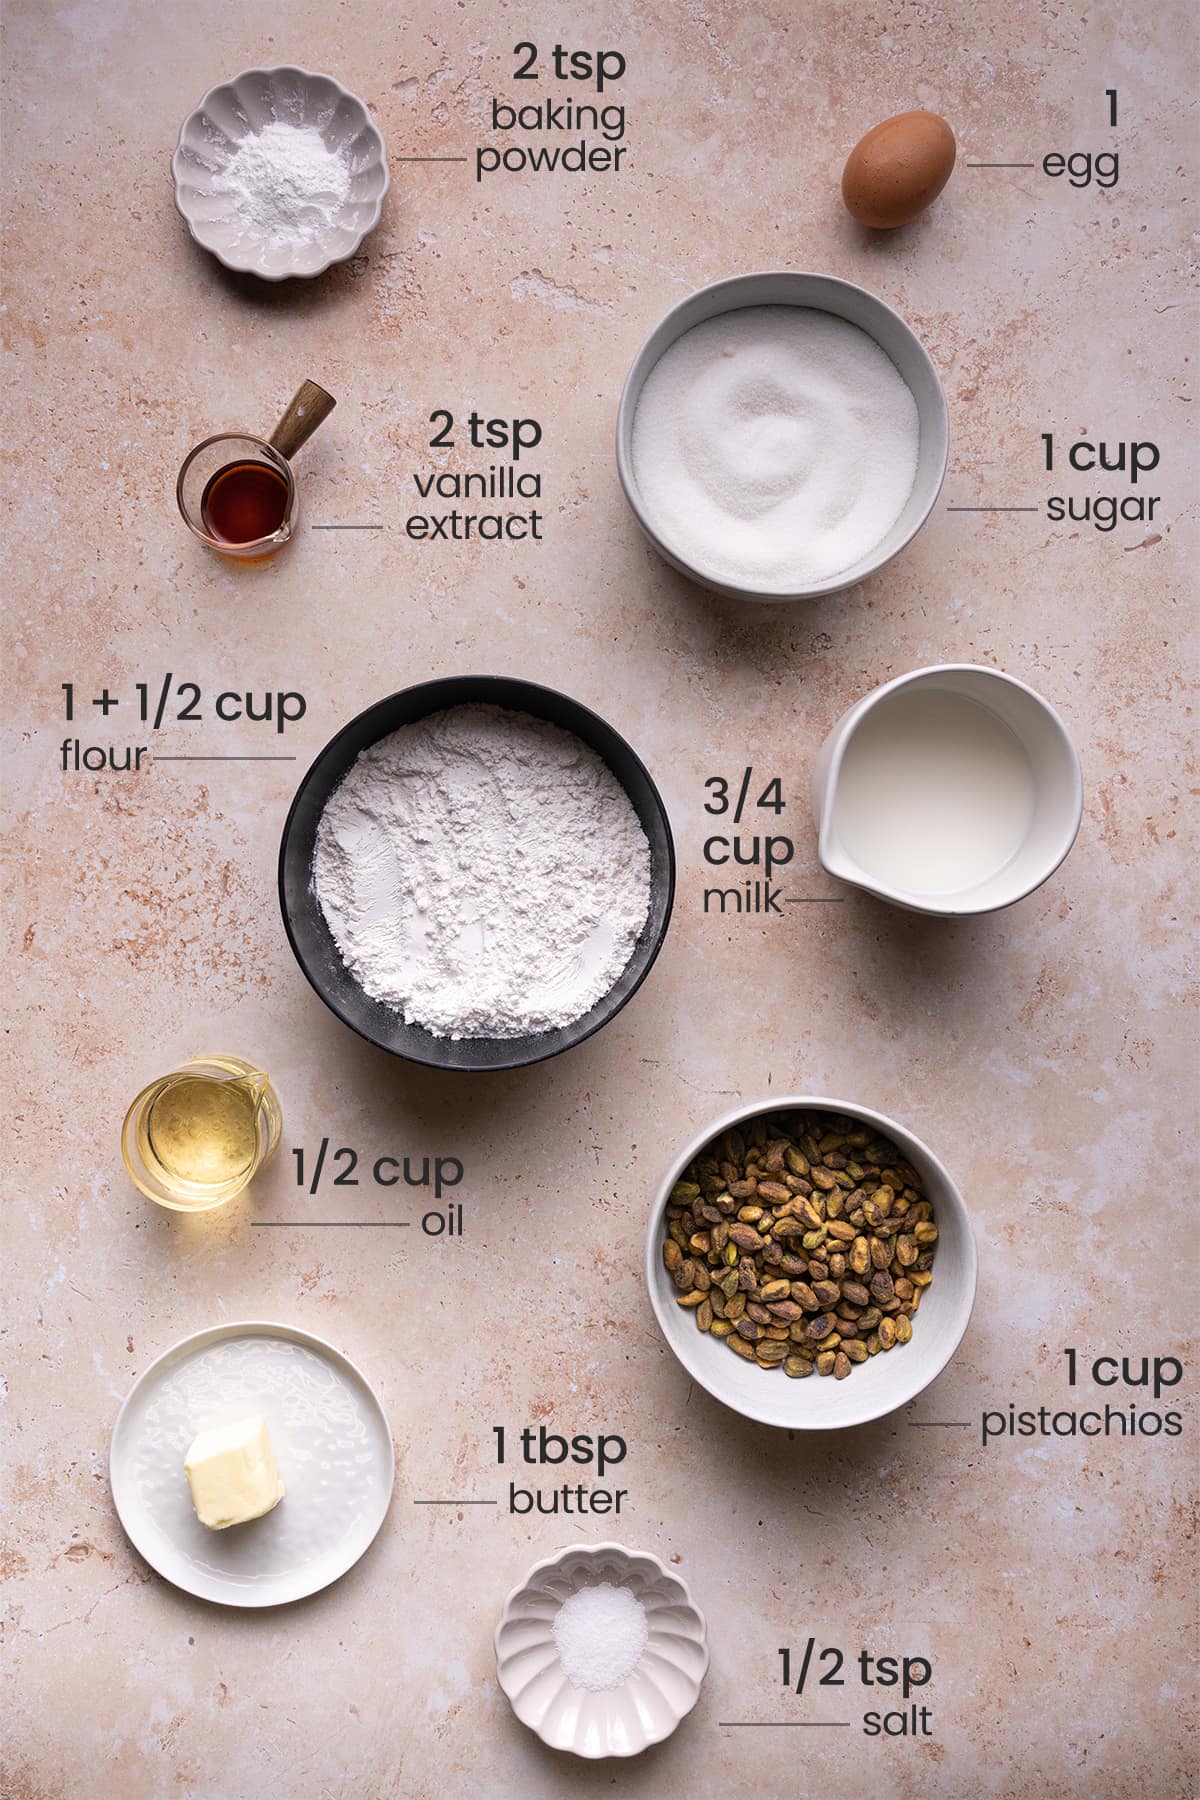 overhead view of all ingredients - baking powder, egg, vanilla extract, sugar, flour, milk, oil, pistachios, butter, salt